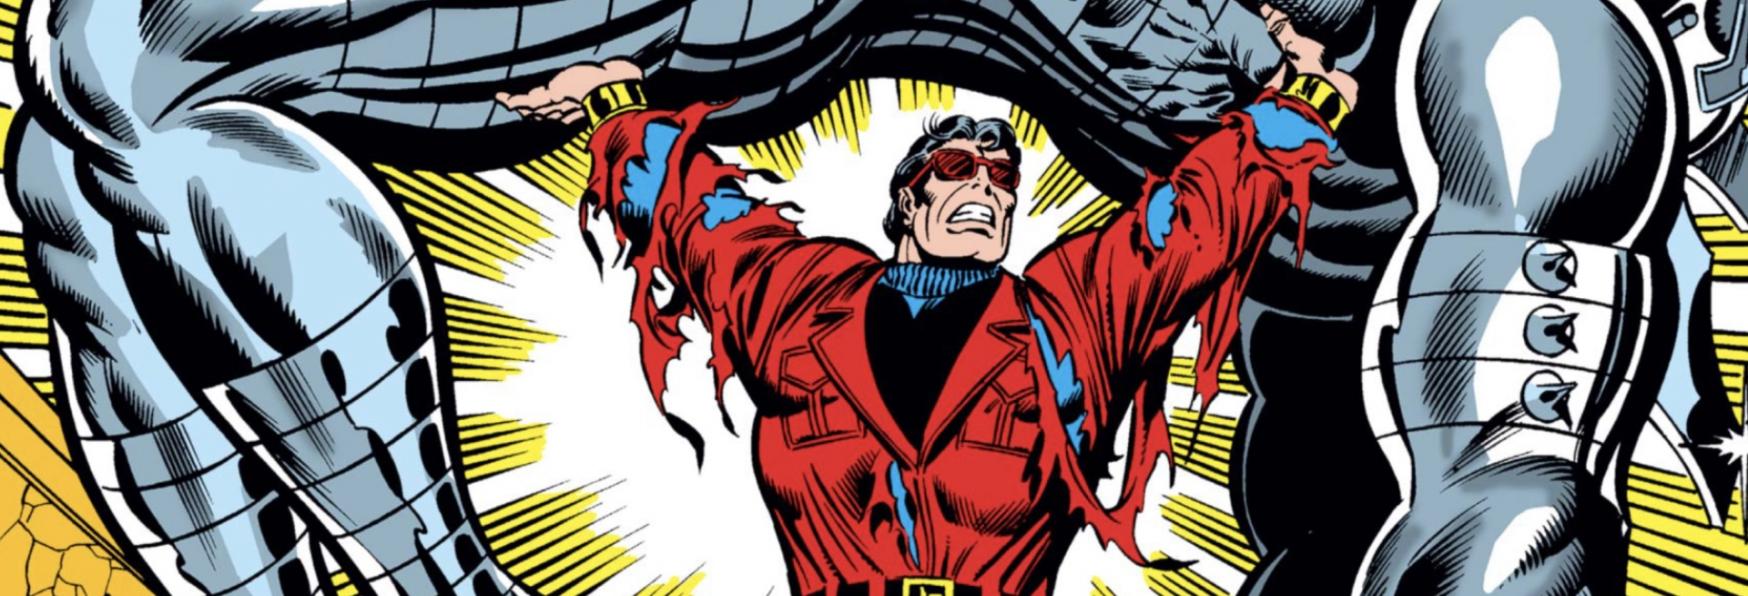 La Marvel sta lavorando a una nuova Serie TV su Wonder Man